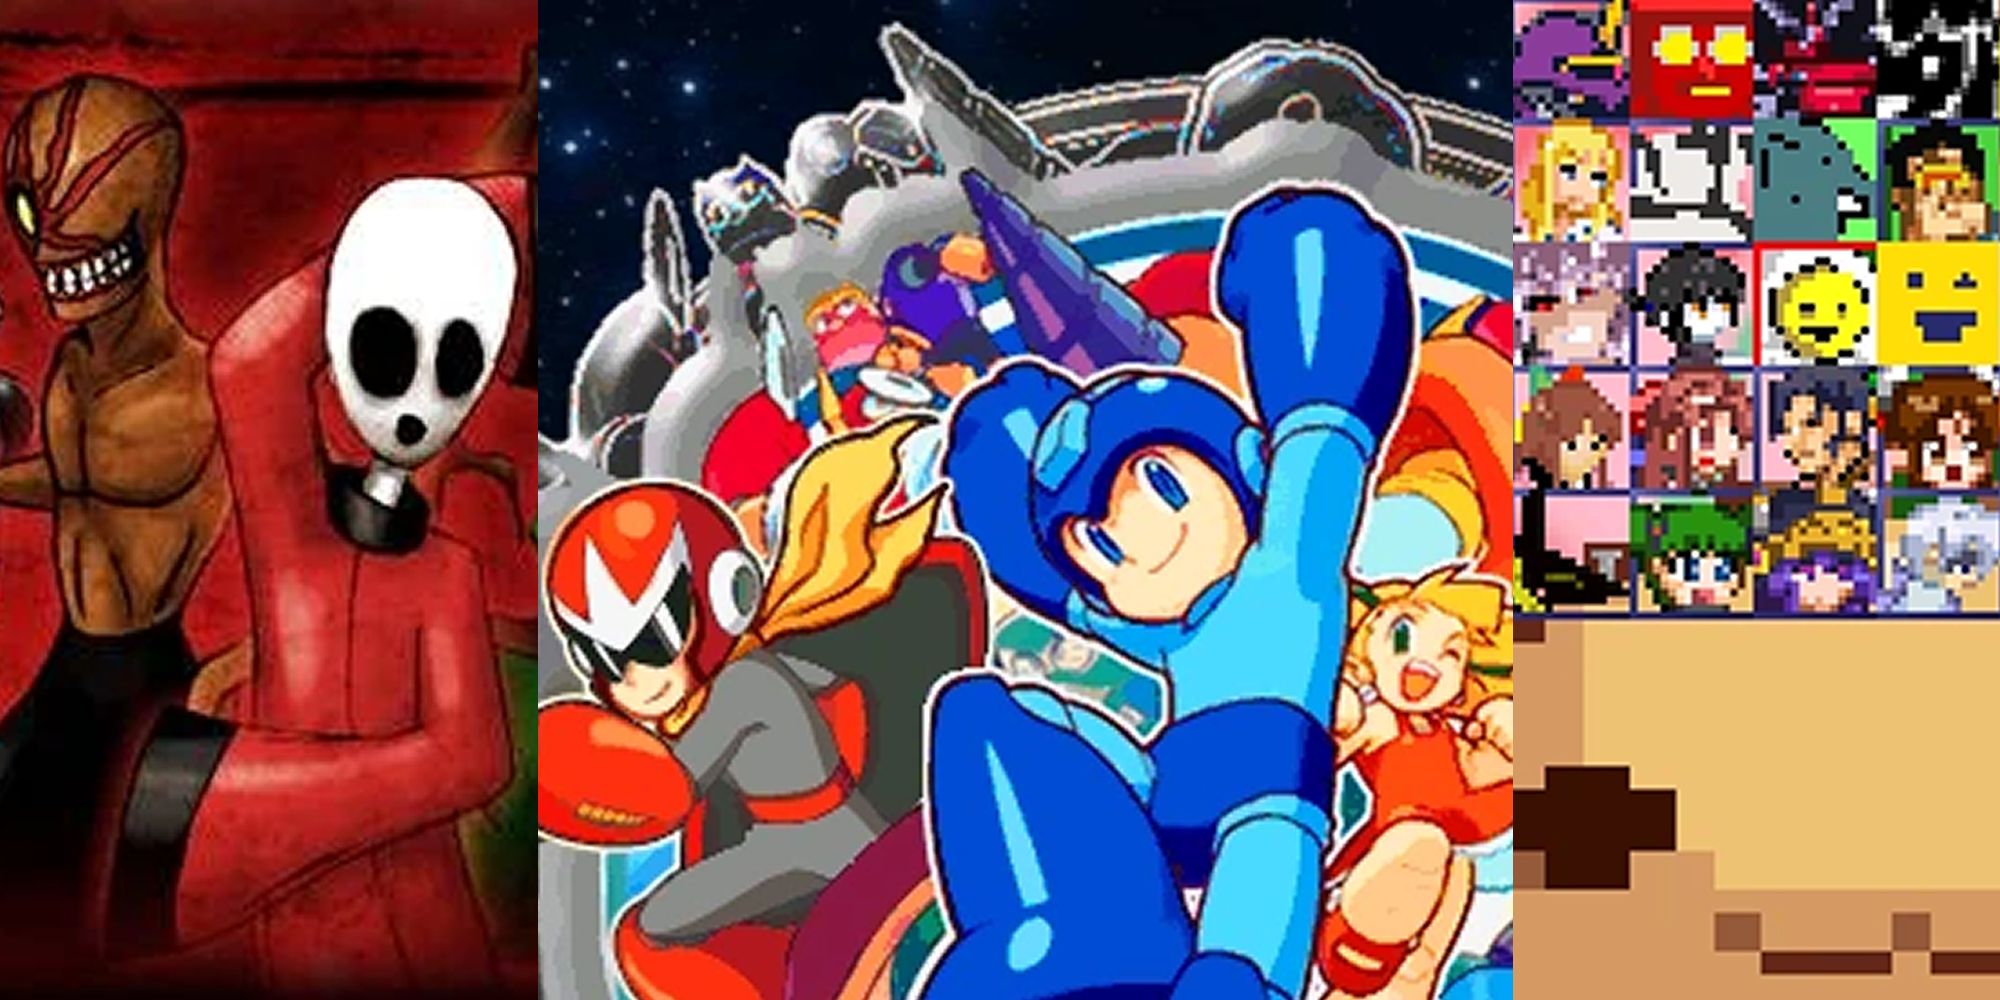 A Split Image Depicting Scenes From The Black Heart, Mega Man Robot Master Mayhem, And Nijikaku-1